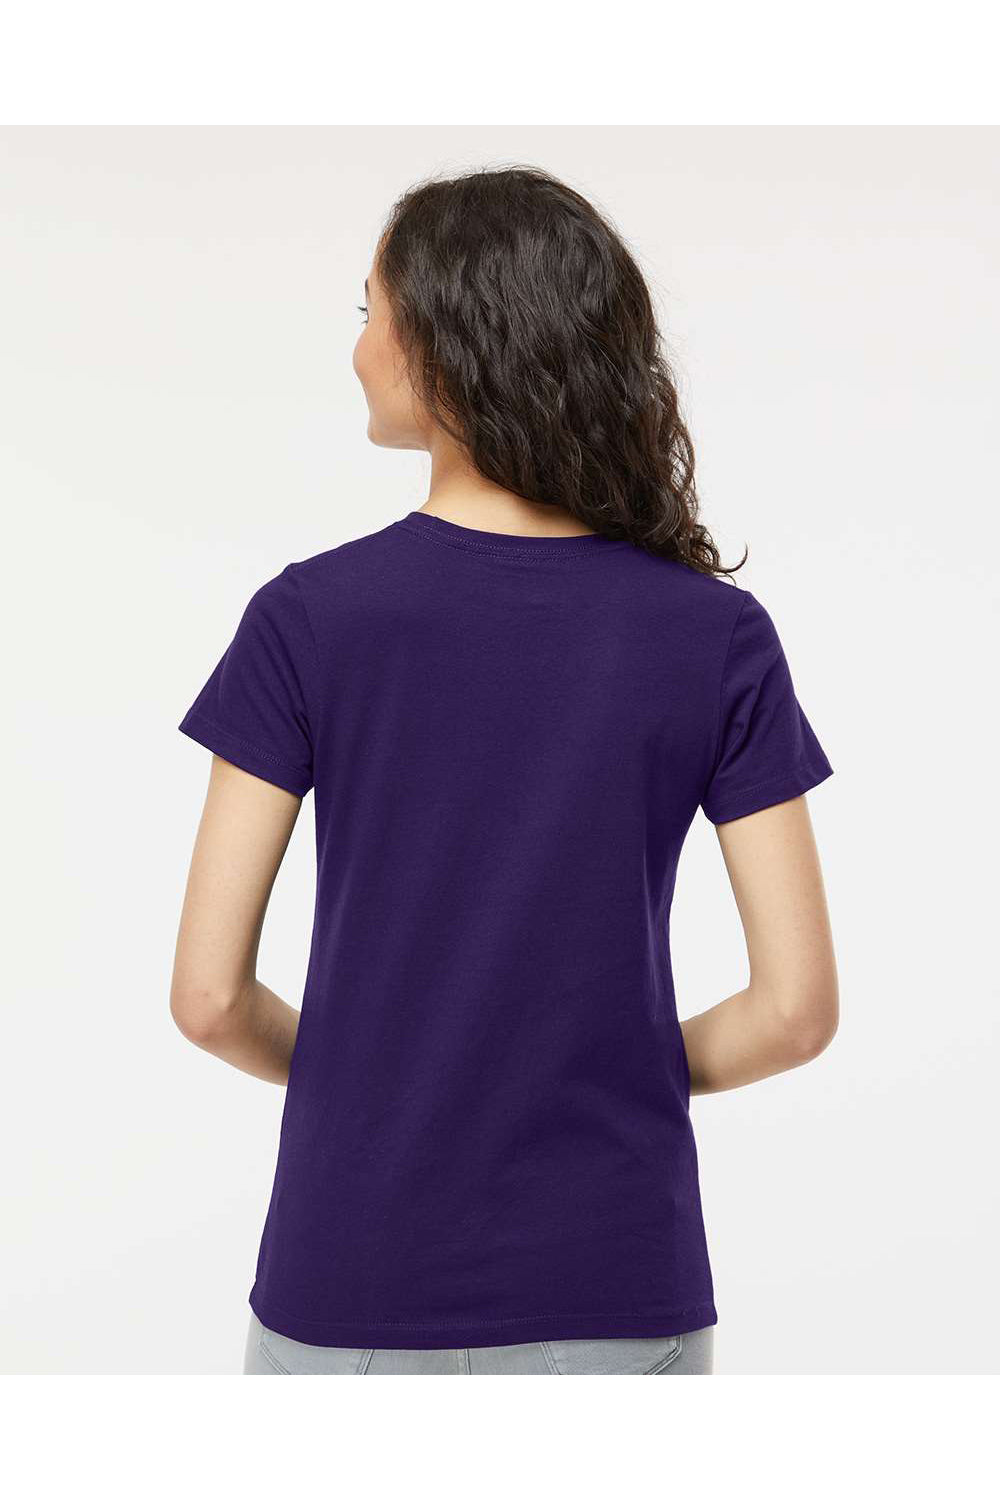 M&O 4810 Womens Gold Soft Touch Short Sleeve Crewneck T-Shirt Purple Model Back